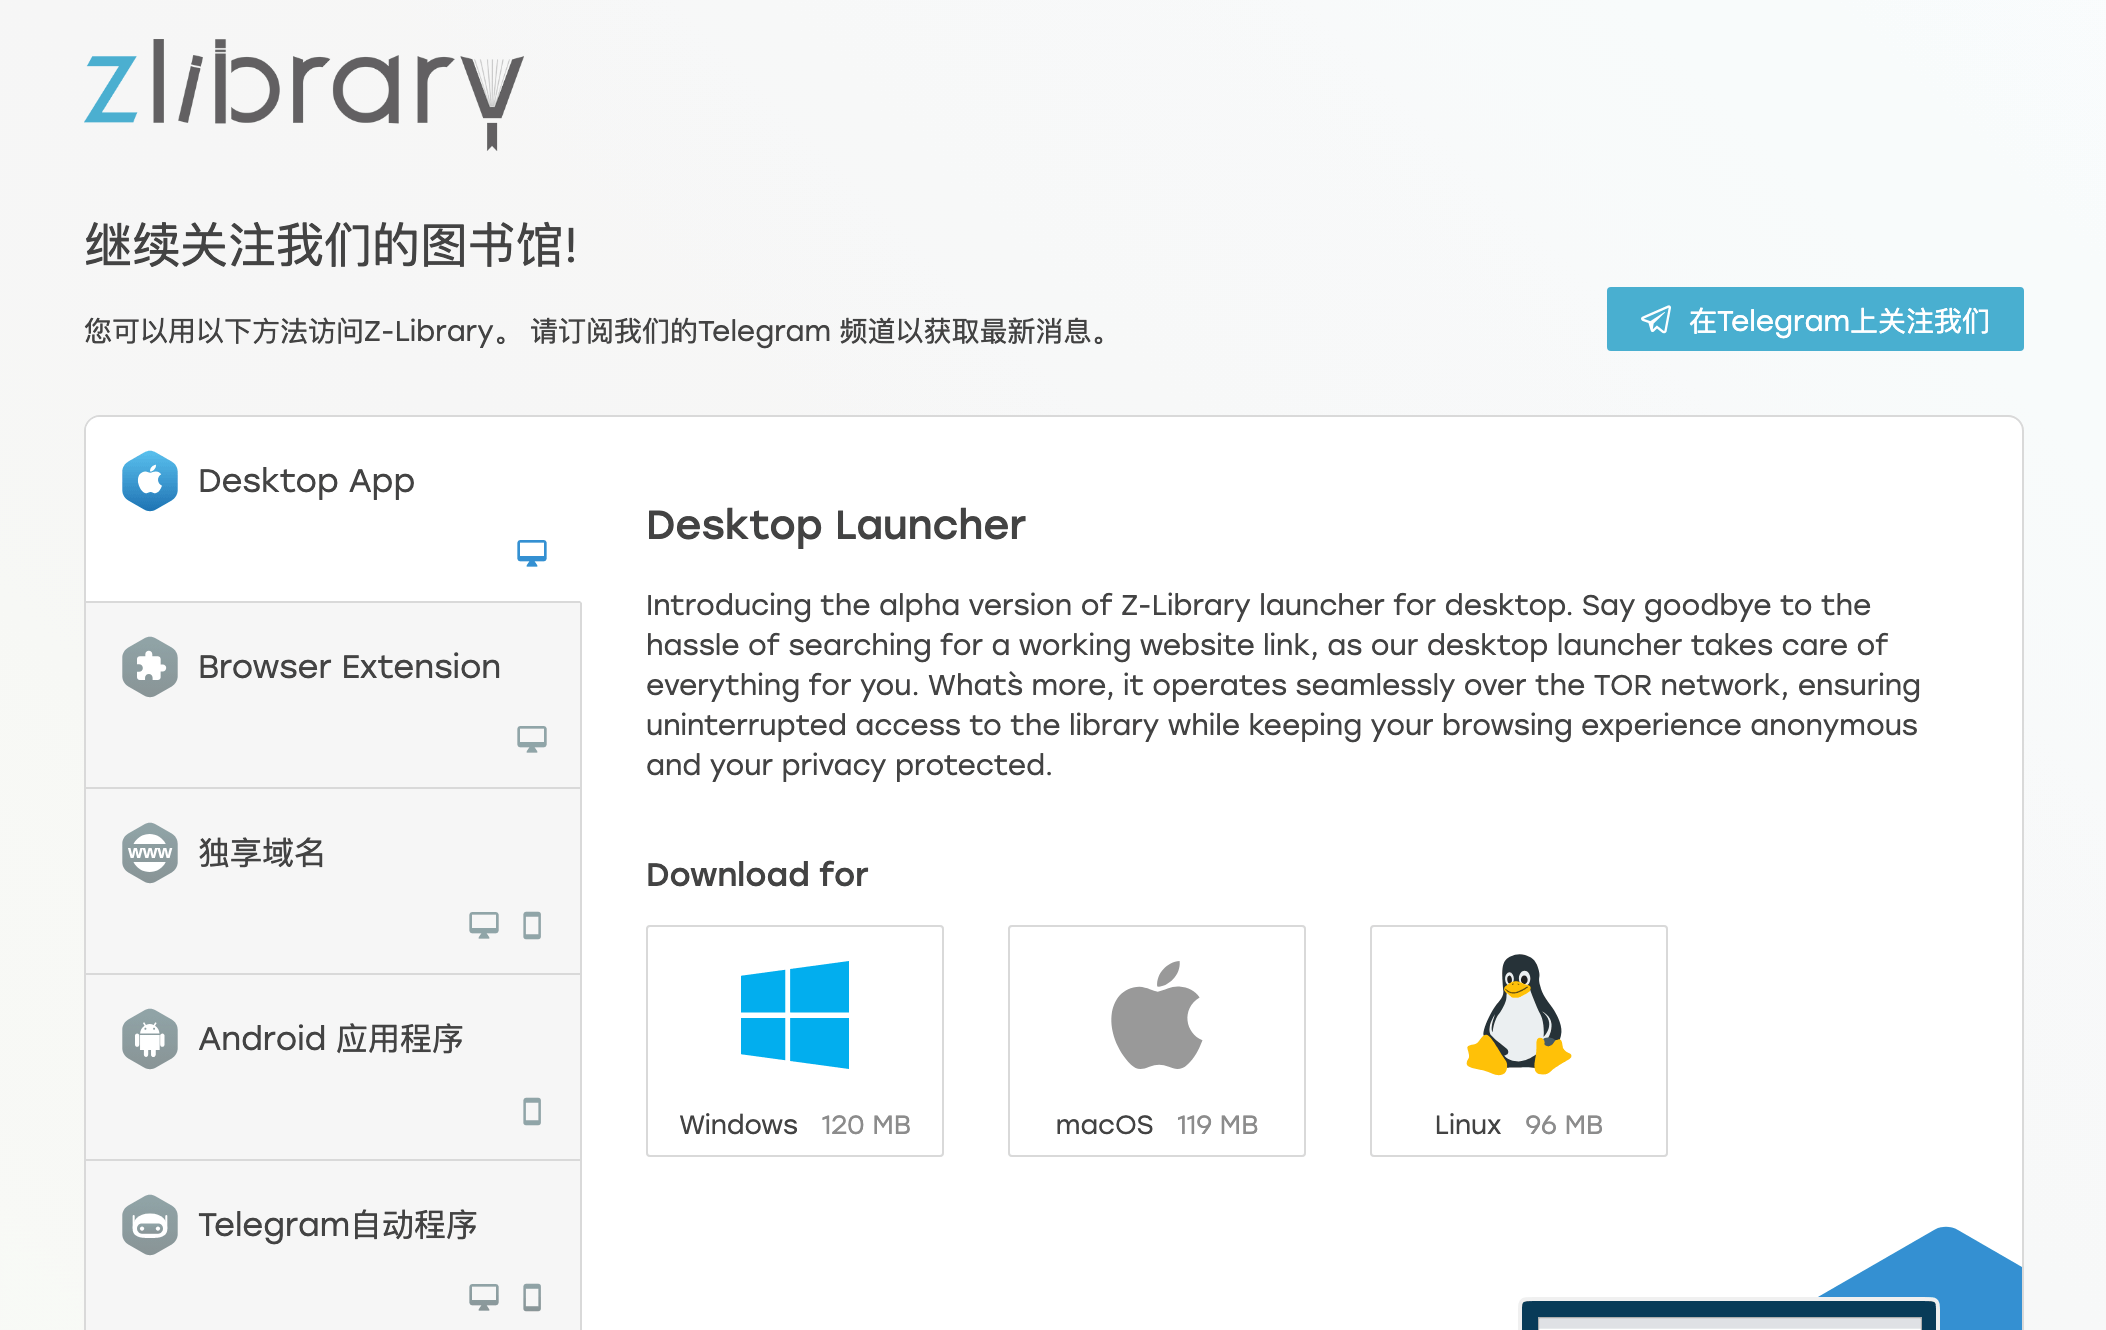 最新版官方Z-library客户端下载 支持Windows、macOS、Android、linux